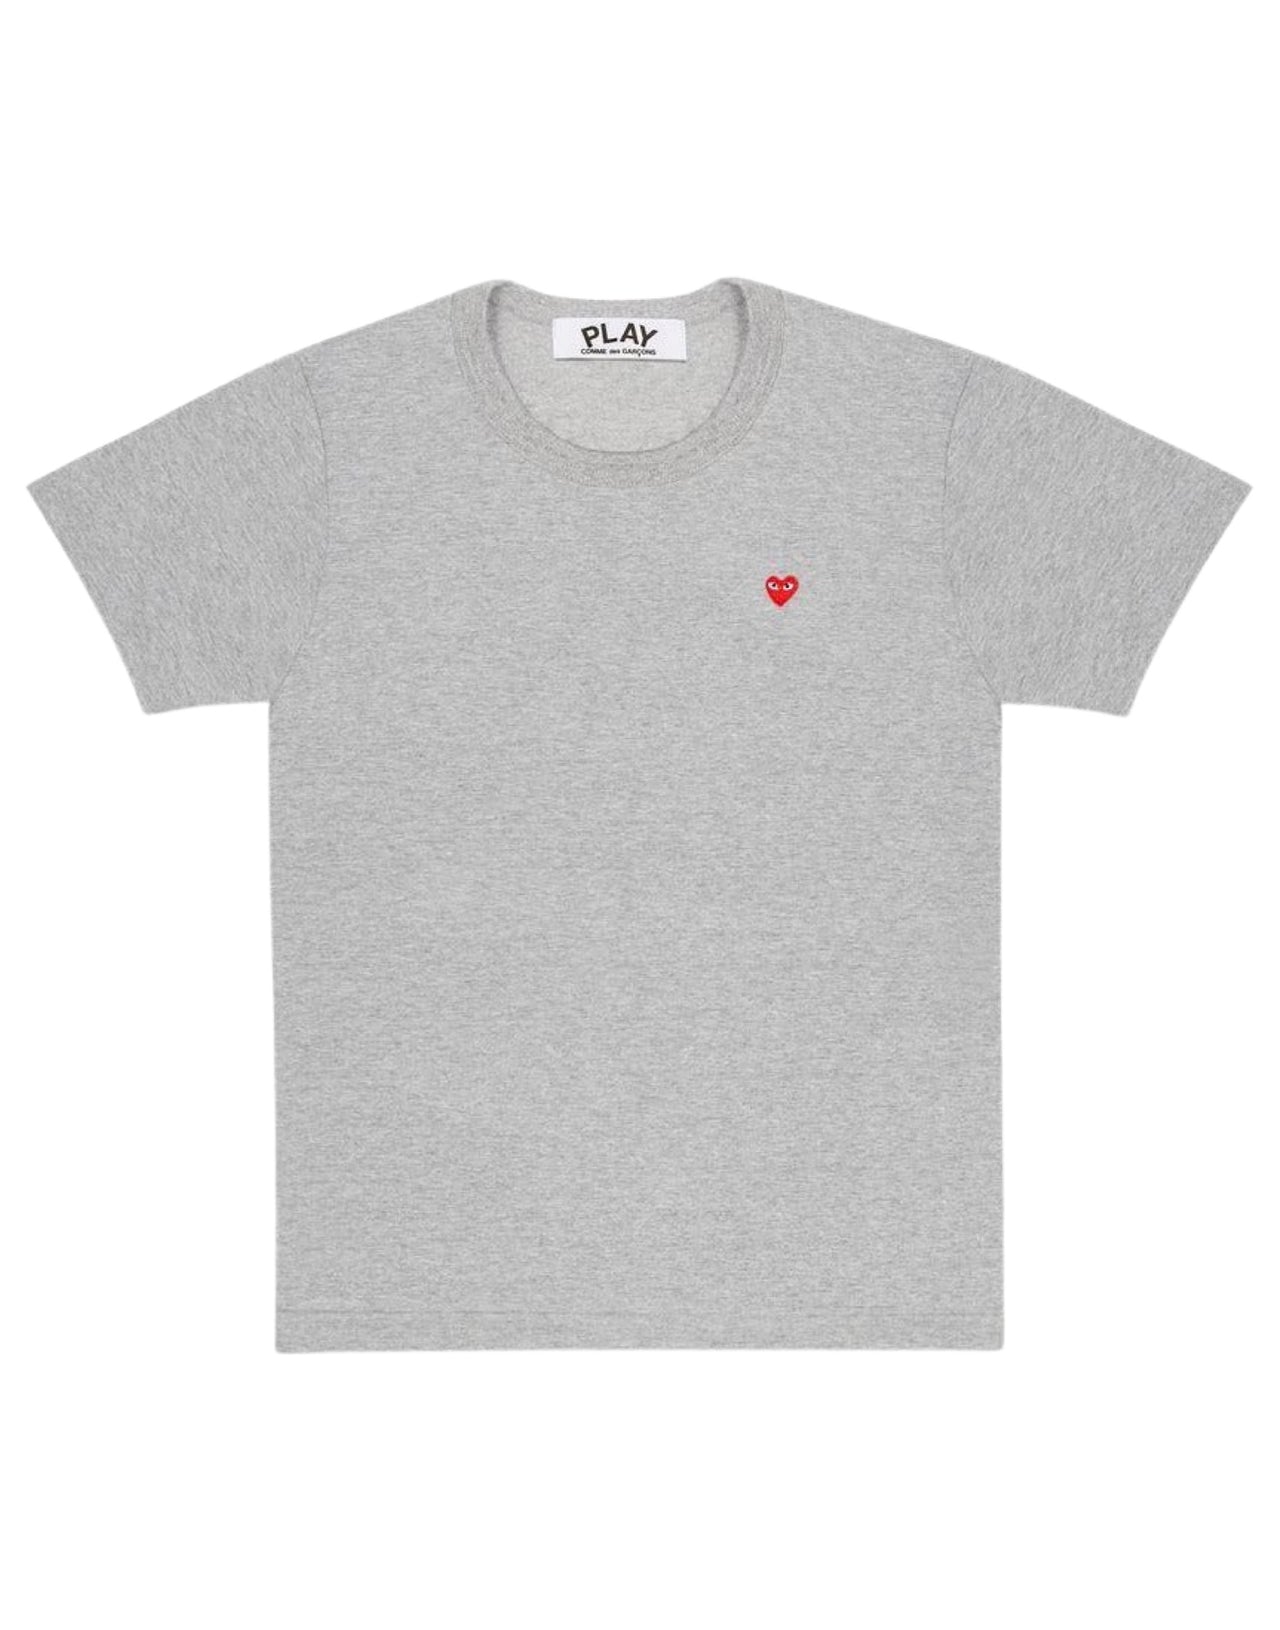 Cdg Play T-shirt Gray Mini Red Slim Fit